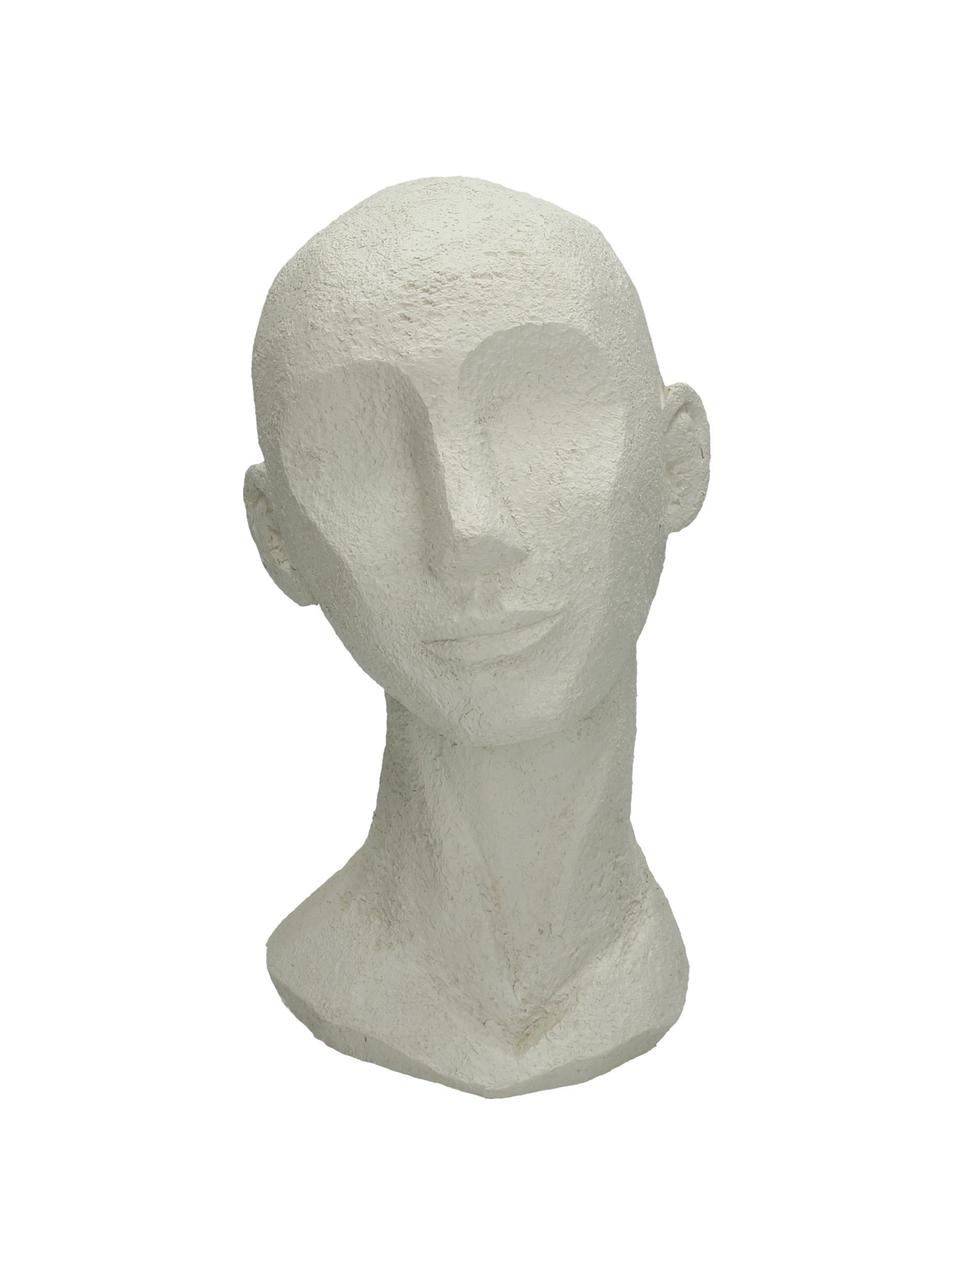 Deko-Objekt Head, Polyresin, Gebrochenes Weiß, B 18 x H 28 cm